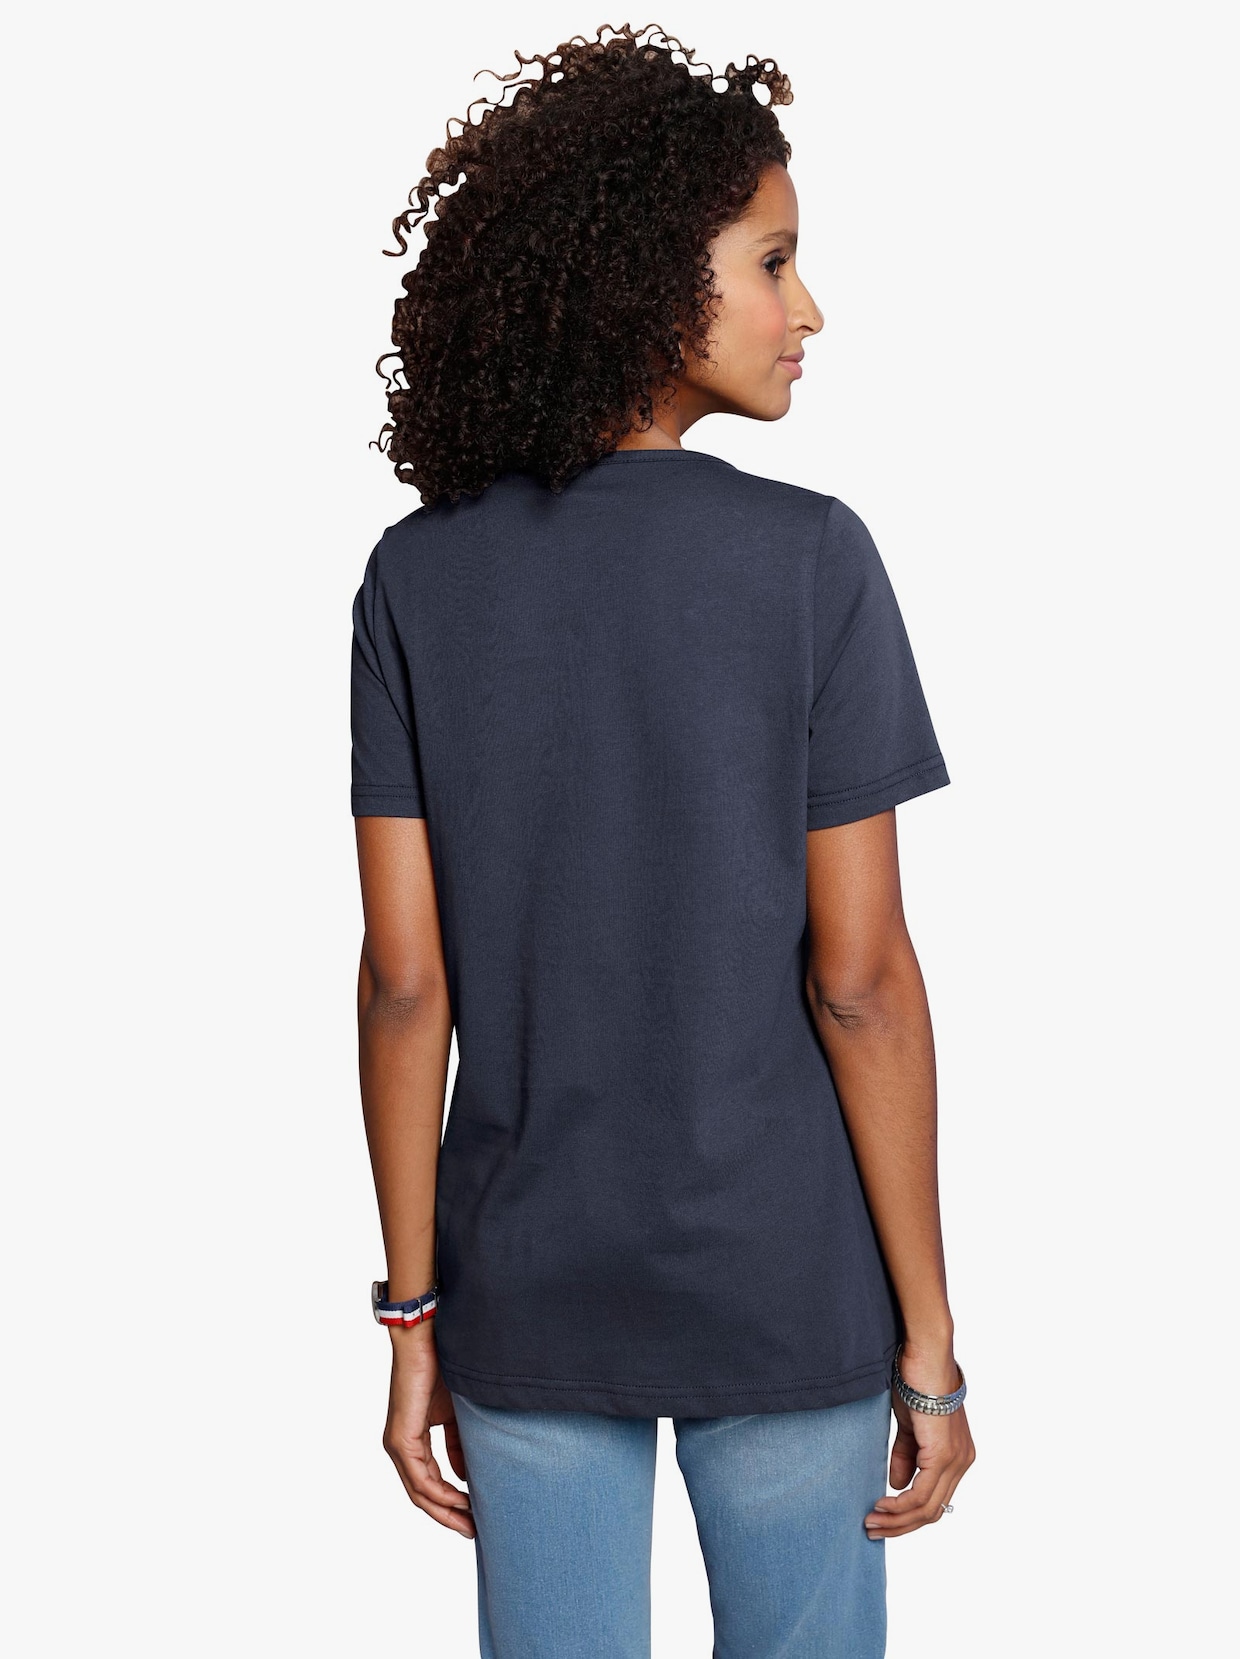 Tričko s krátkým rukávem - námořnická modrá